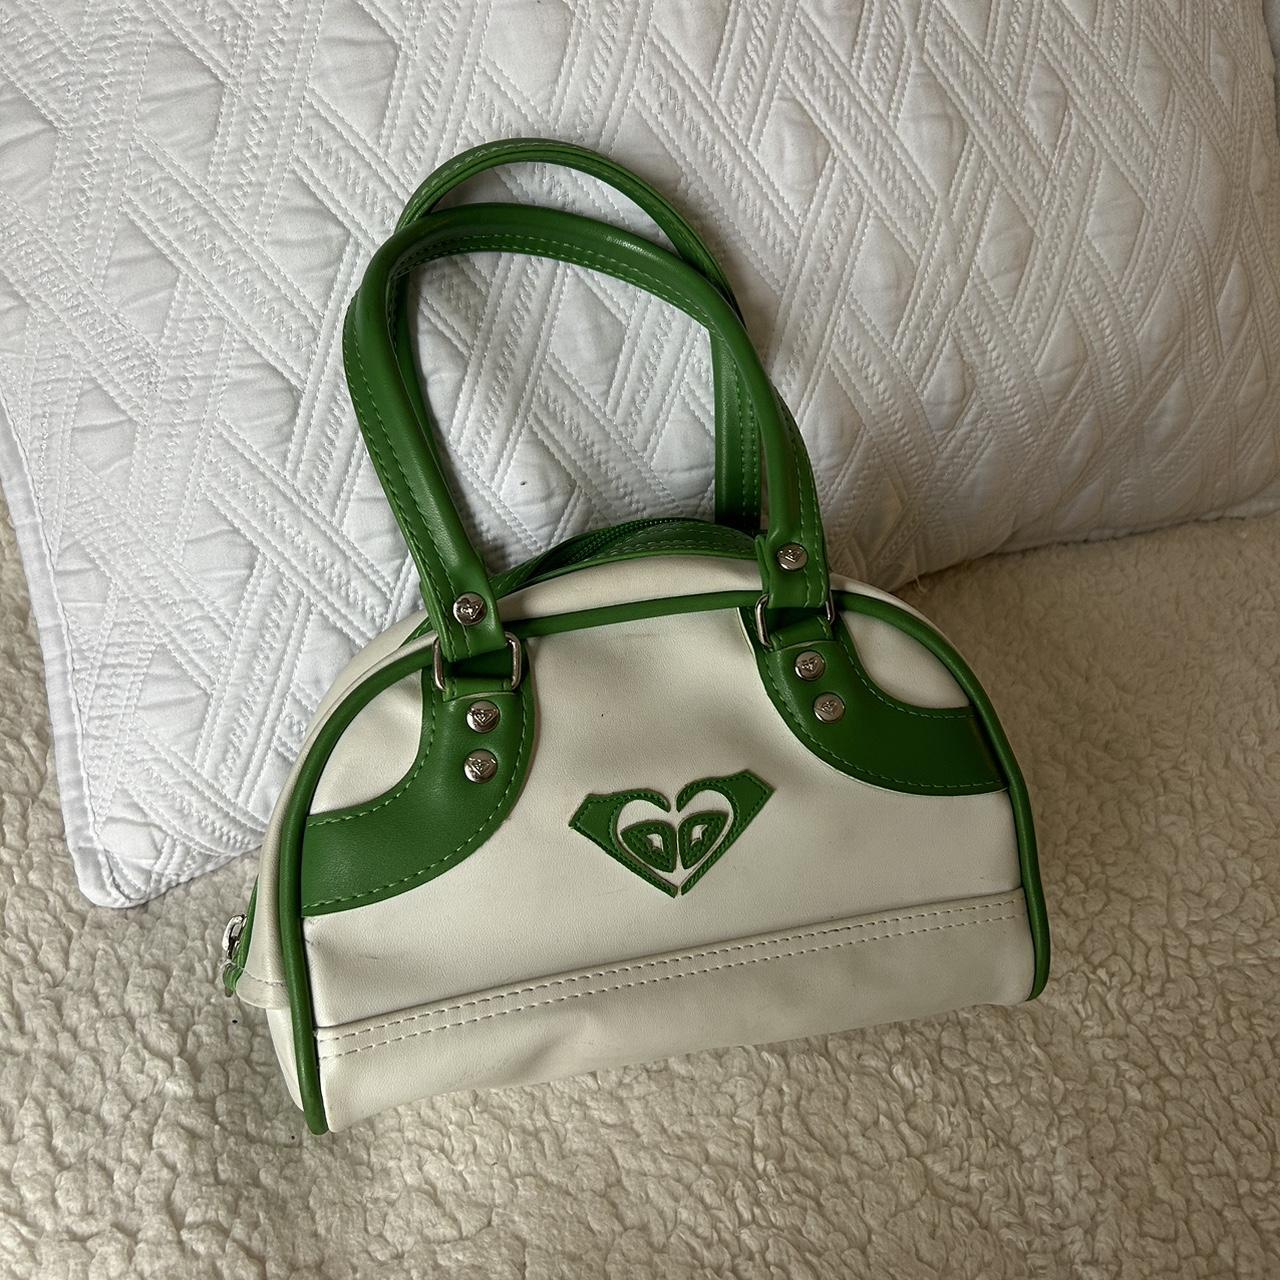 Roxy Women's Bag - Green